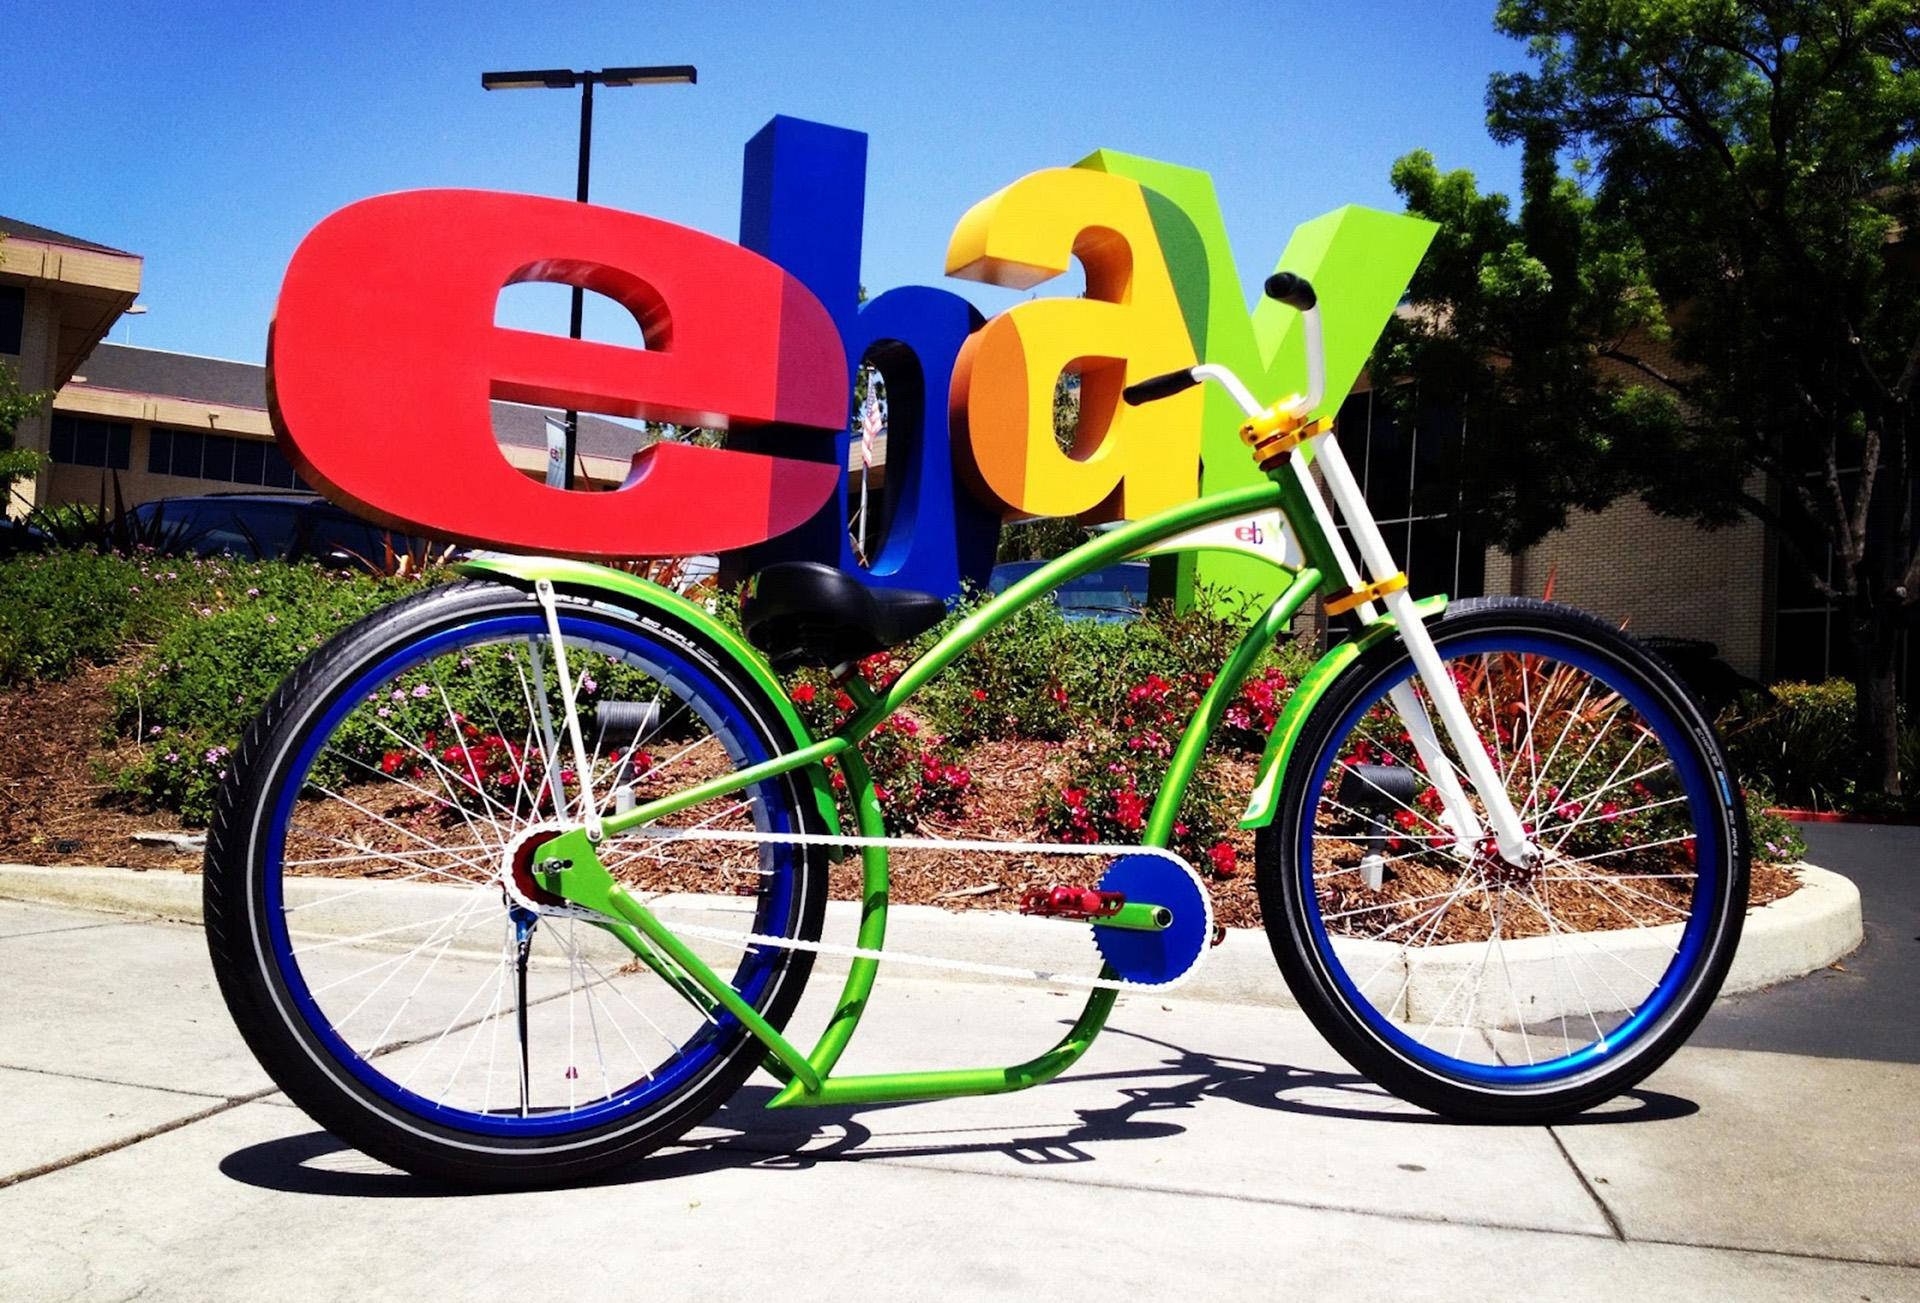 Ebay Logo And Bicycle Background